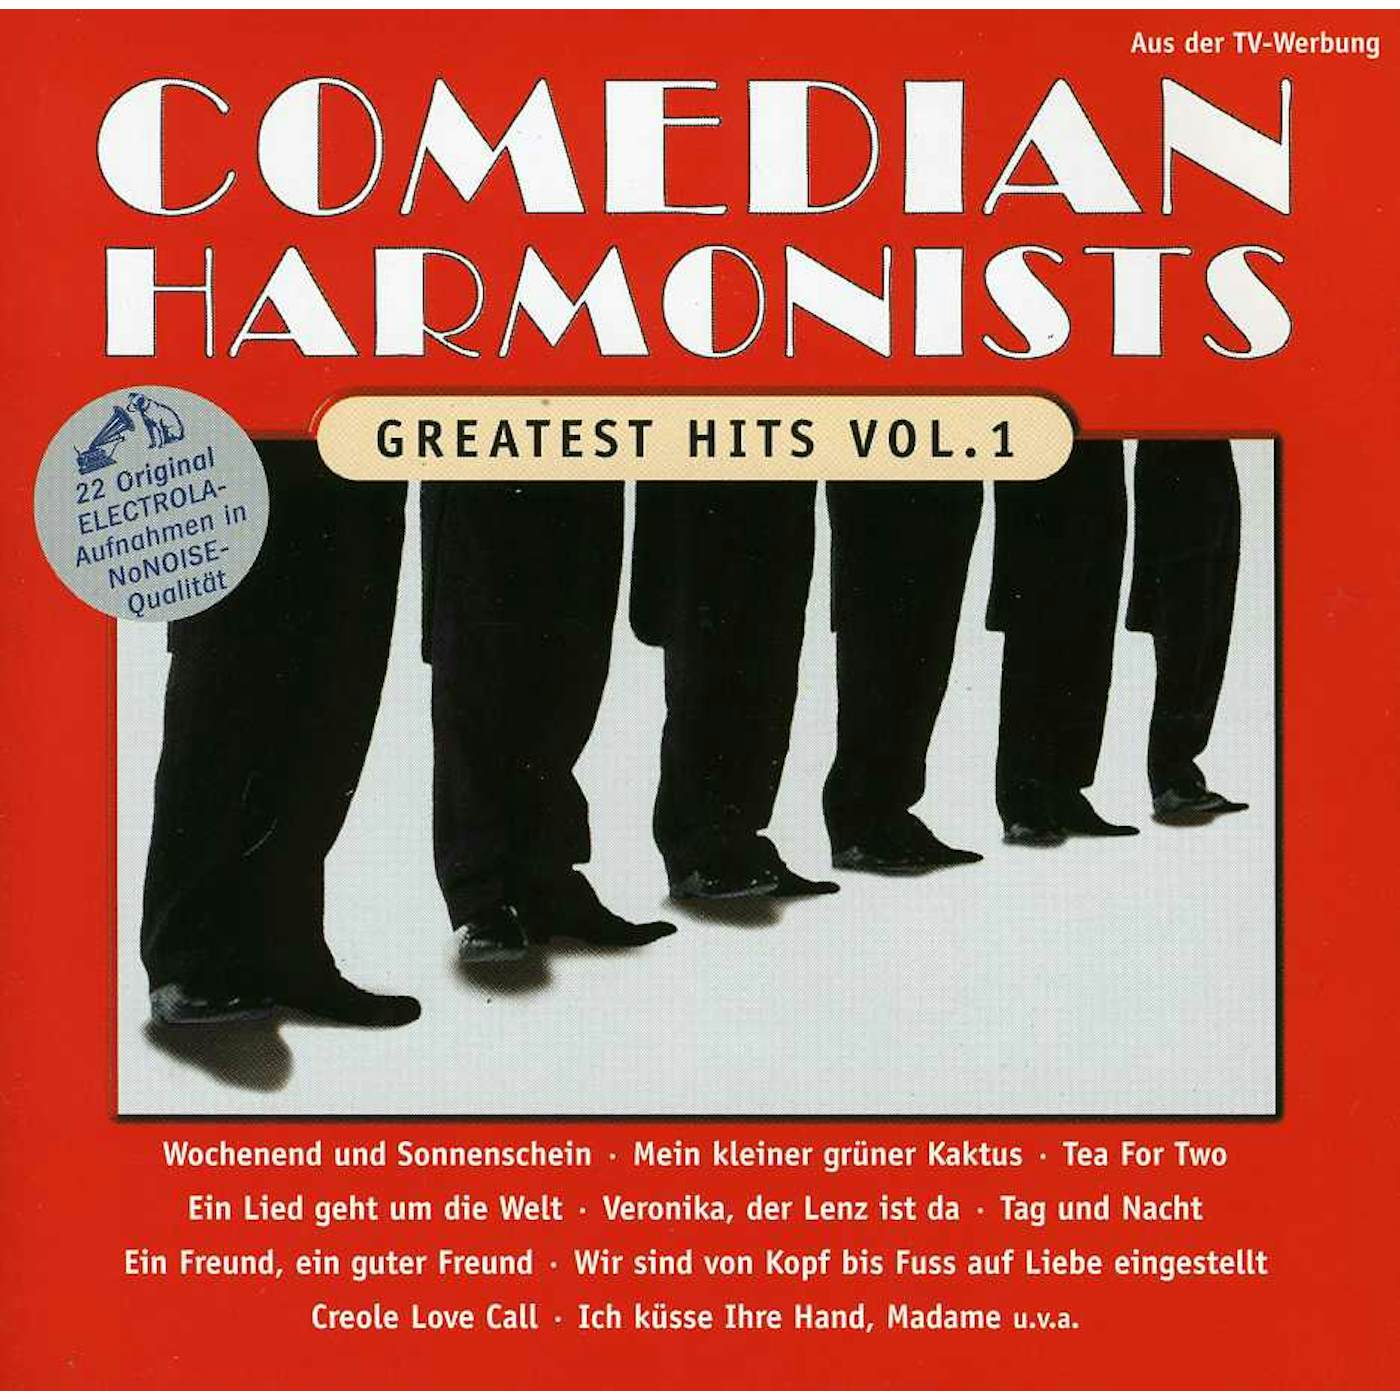 Comedian Harmonists GREATEST HITS 1 CD